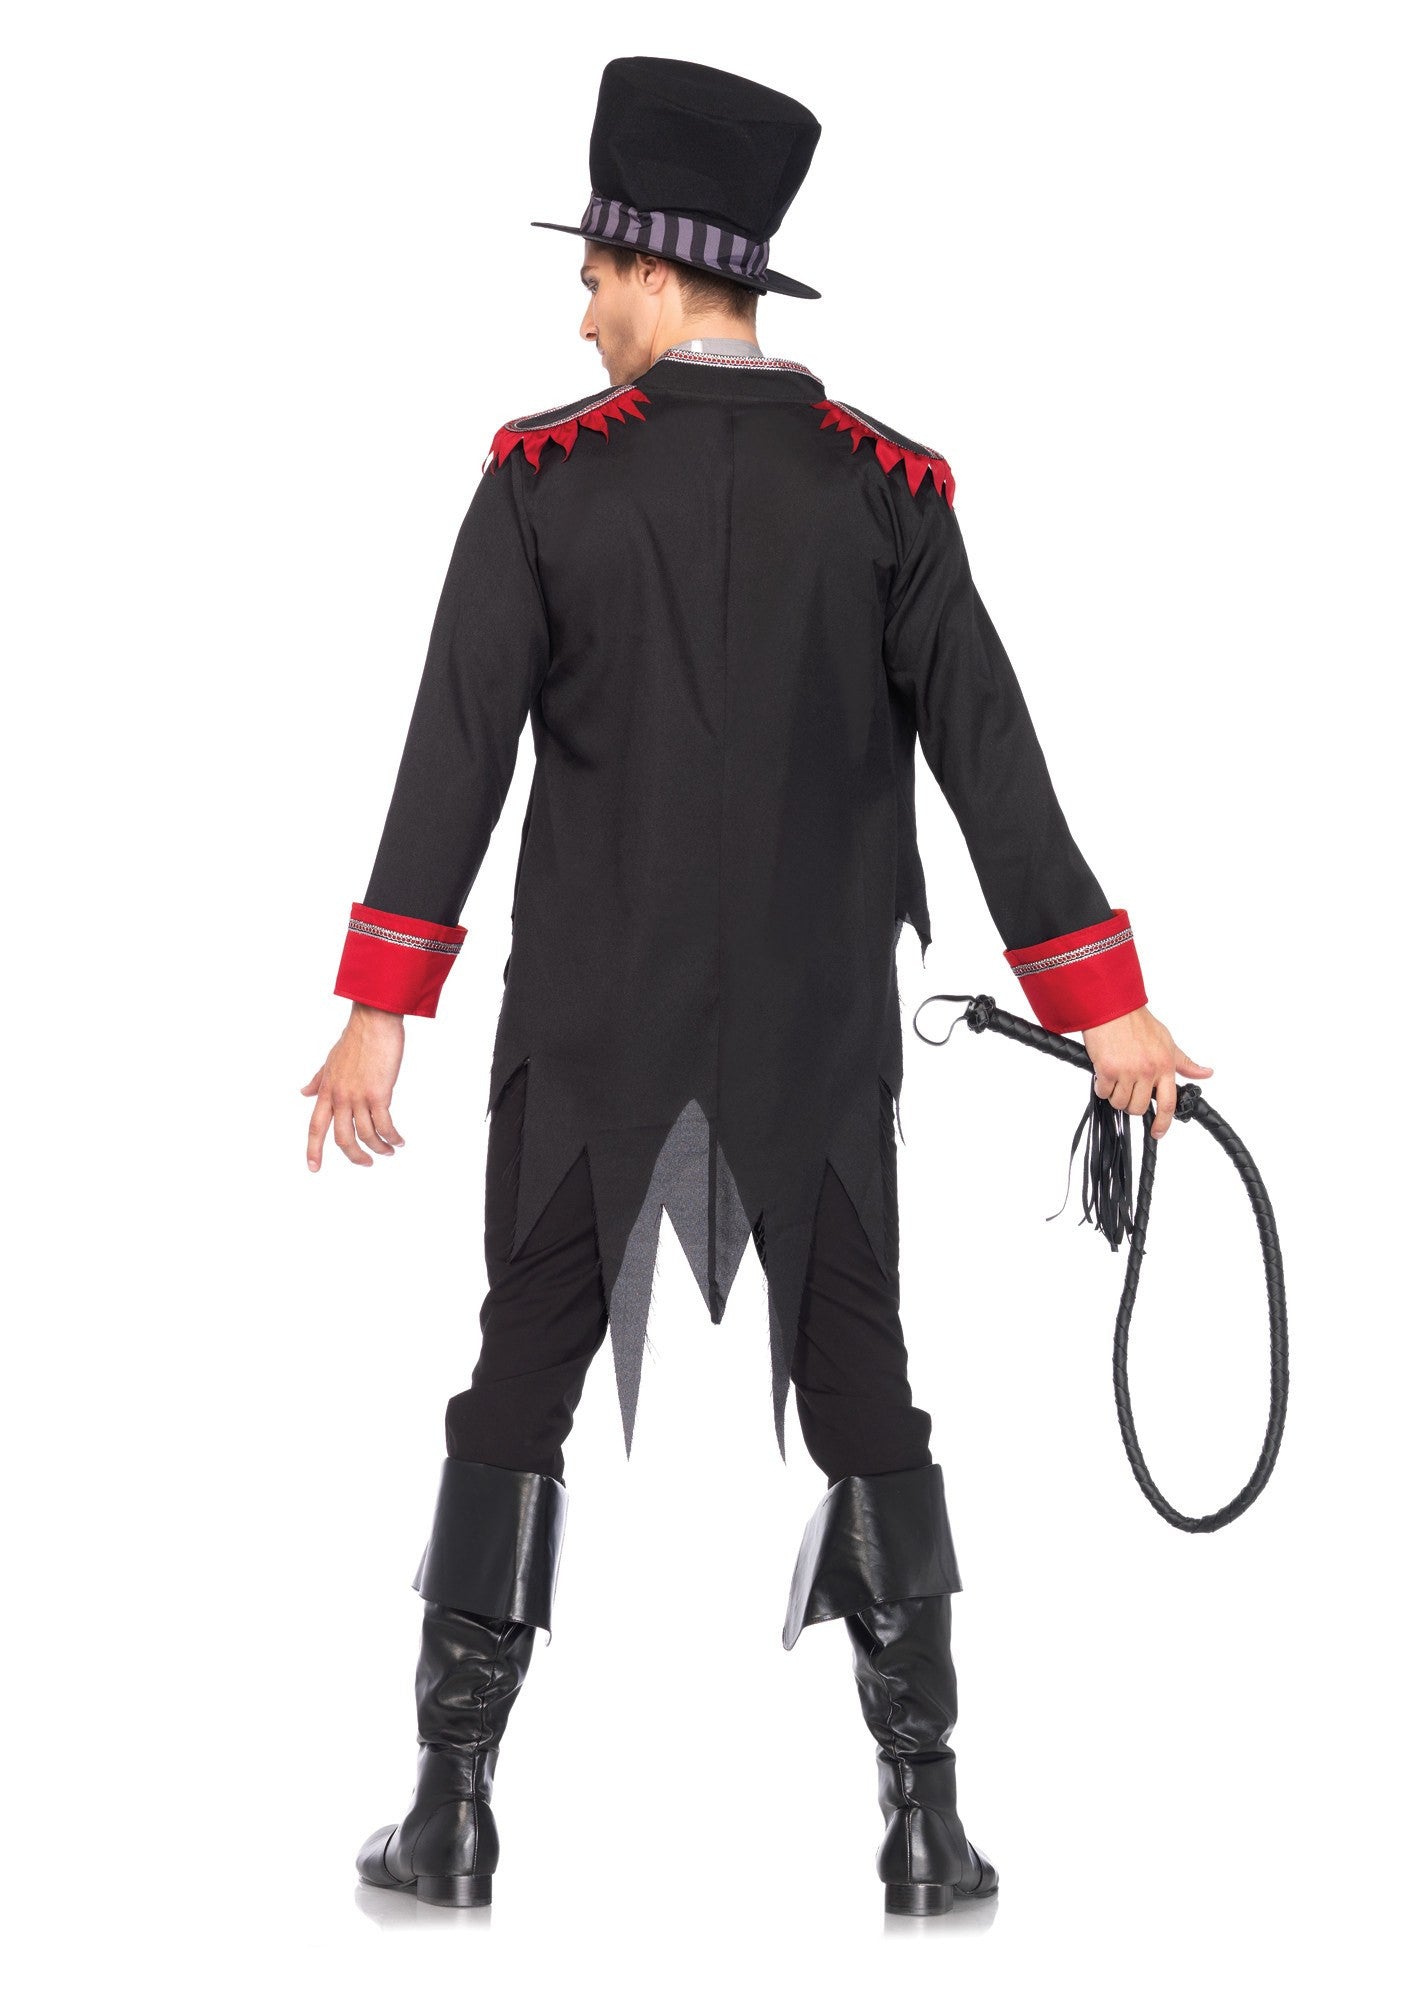 Costume - Sinister Ring Master Costume